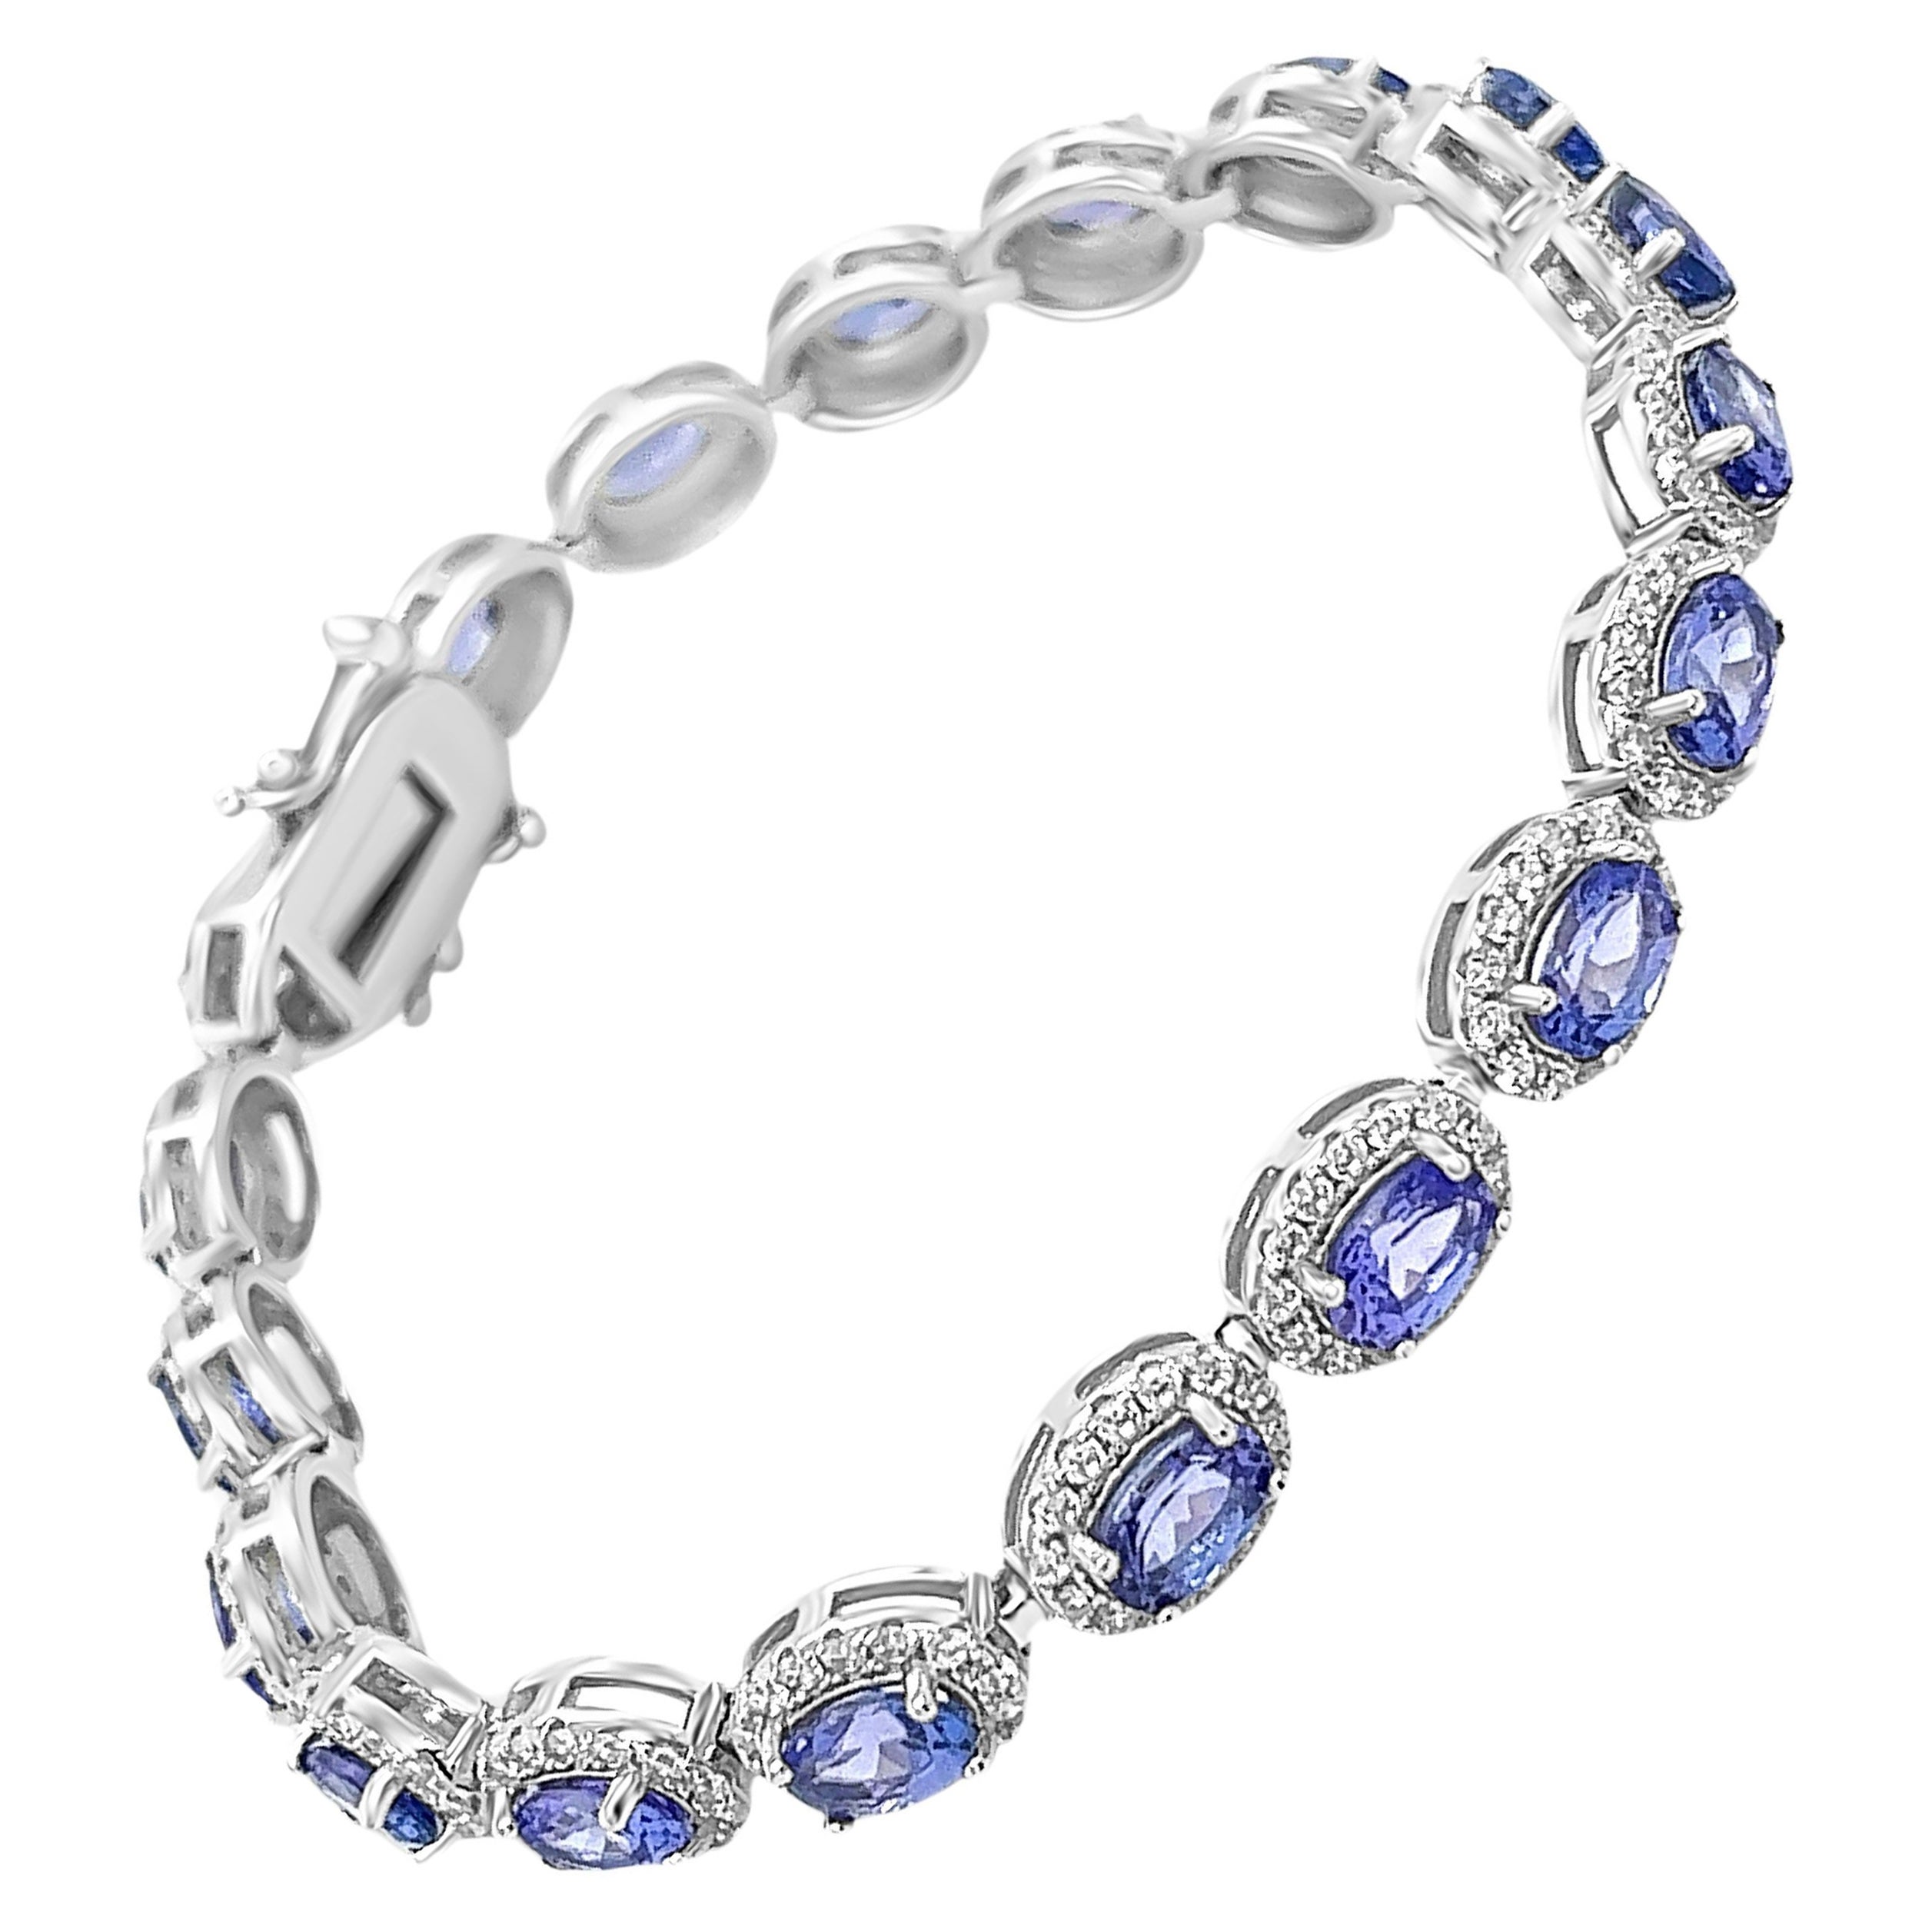 19.23 Carats Tanzanite Tennis Bracelet Oval Cut Sterling Silver Bridal Jewelry 